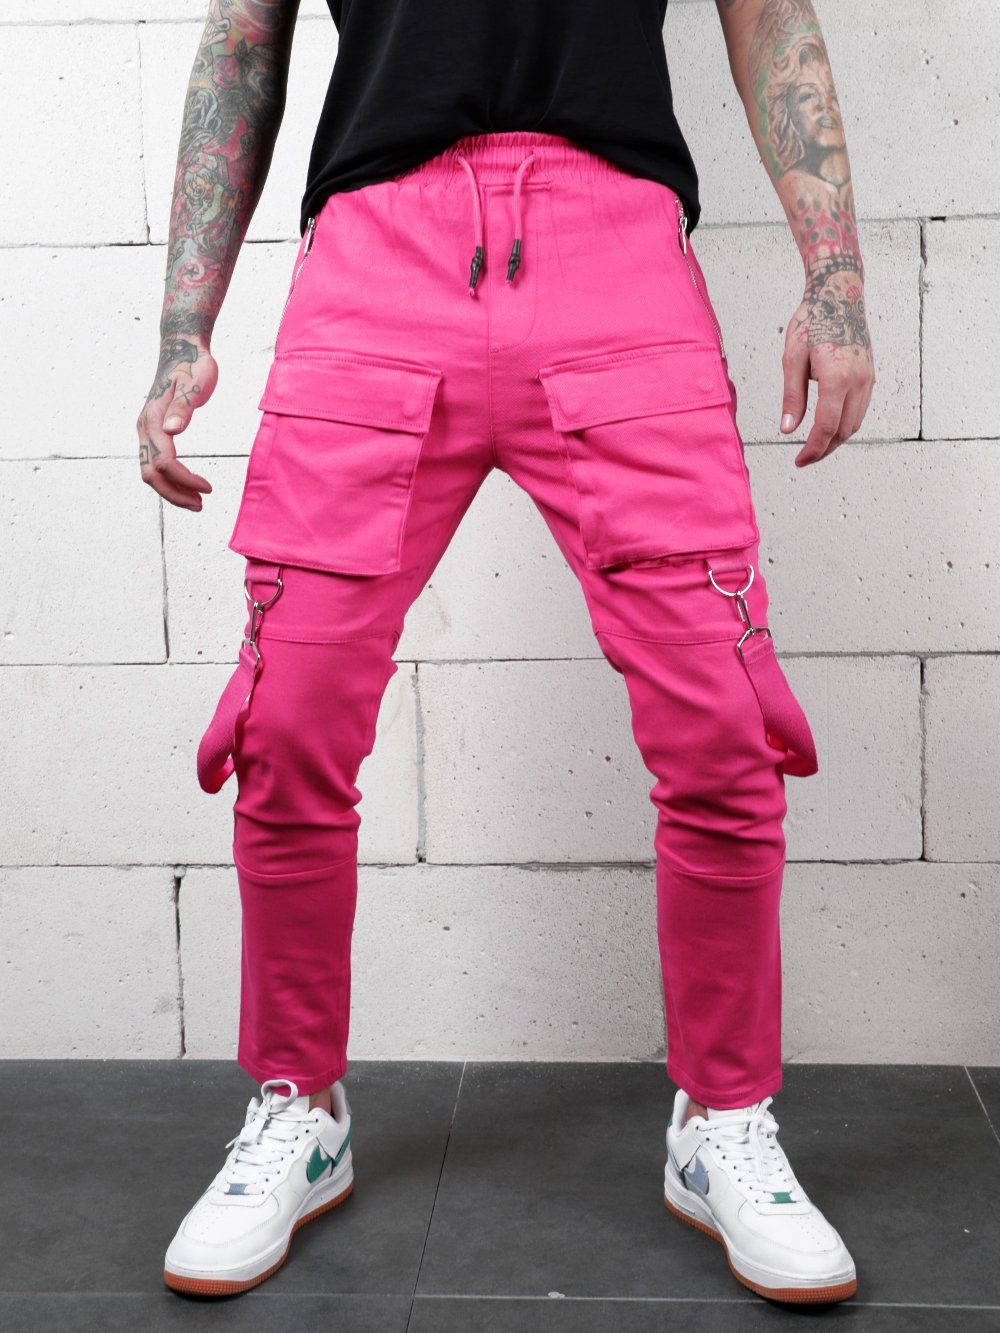 A man wearing a PINK BRONX cargo pants.